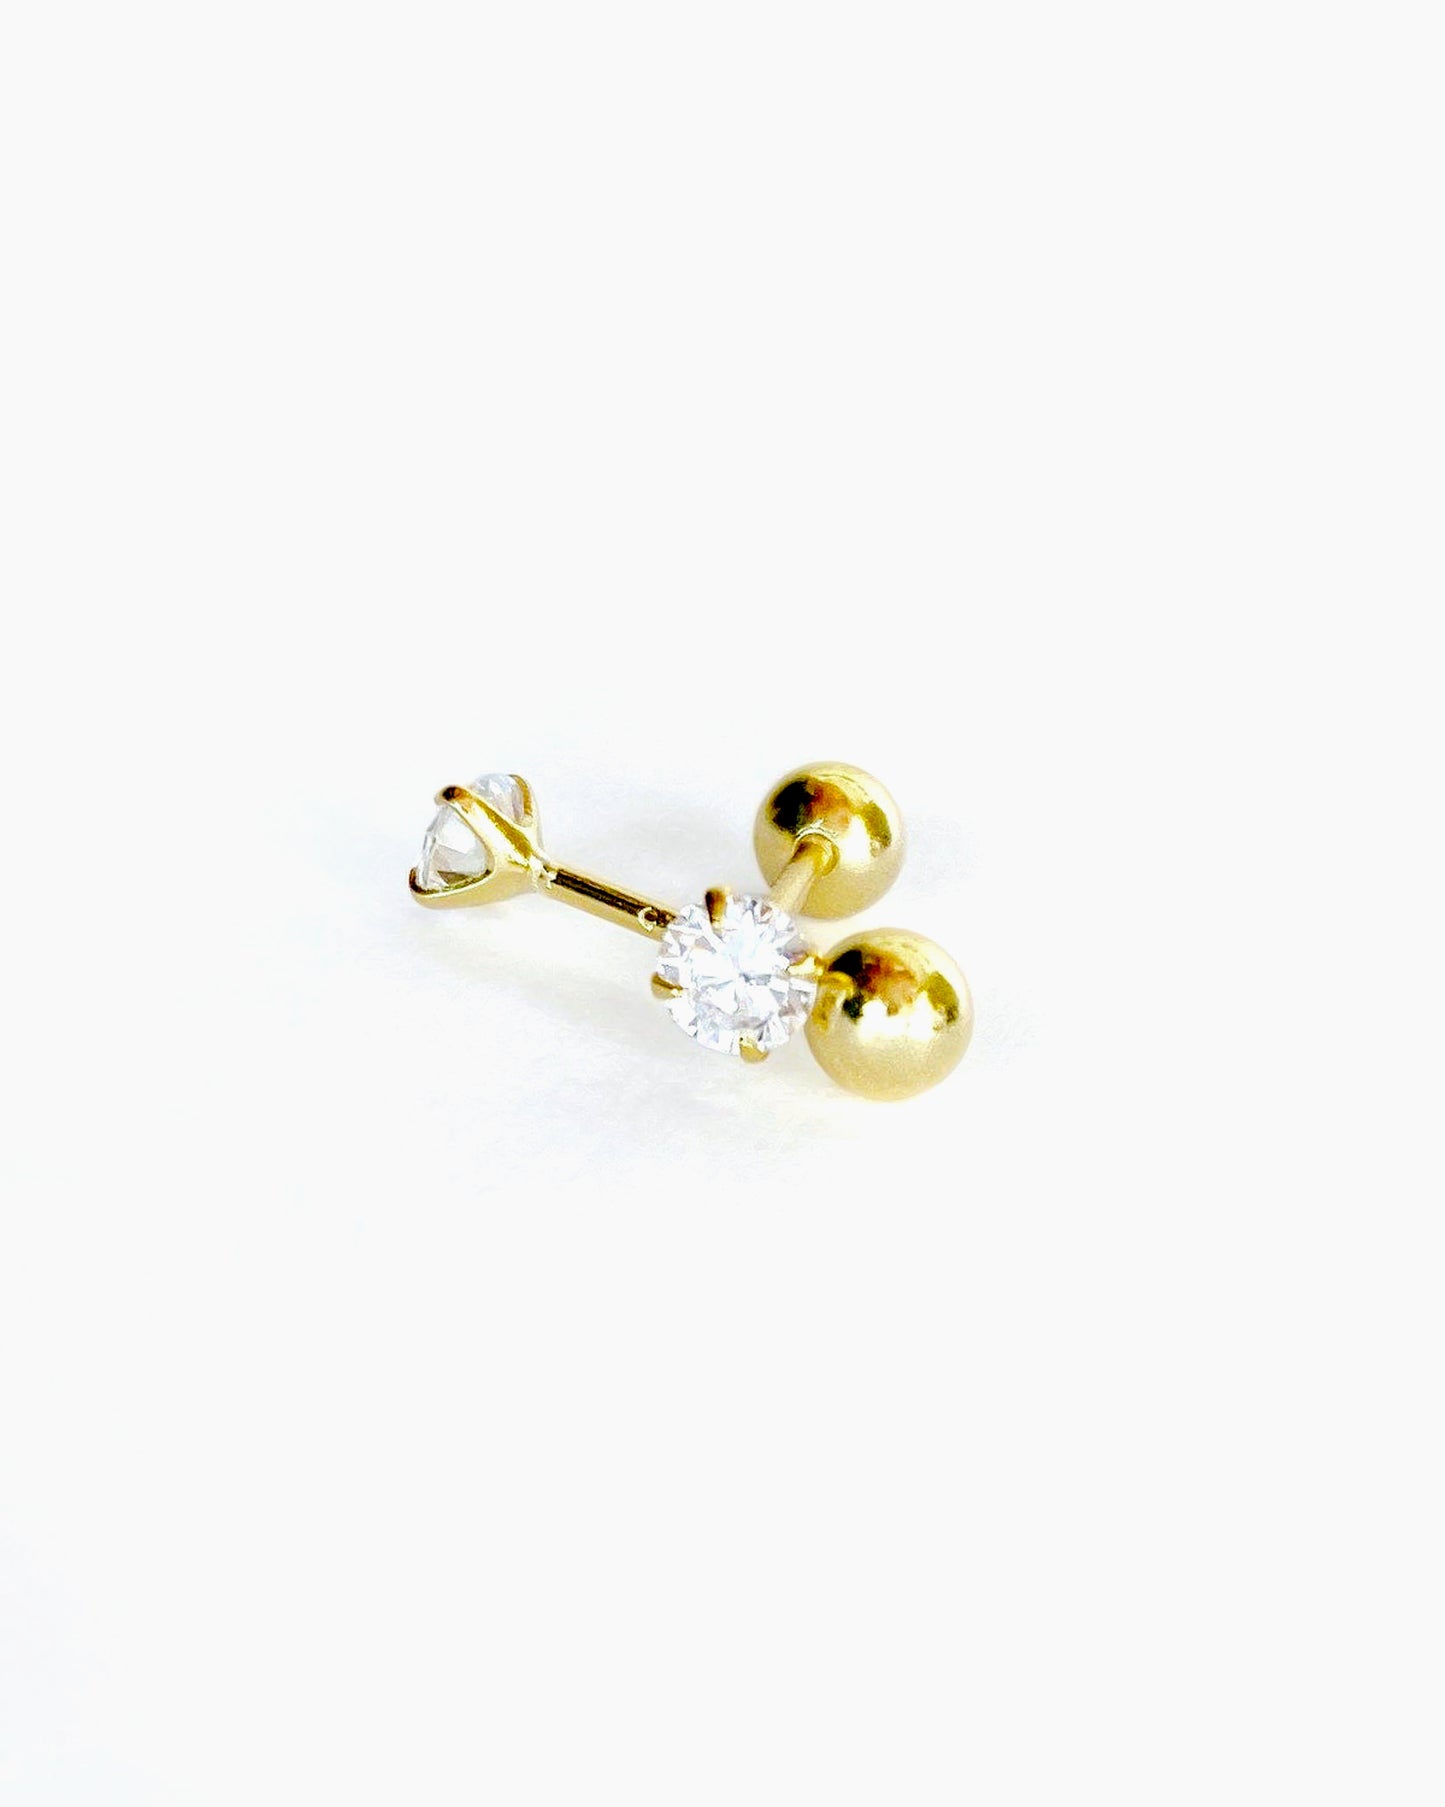 Teeny tiny 18k gold stud earrings with screw back ball